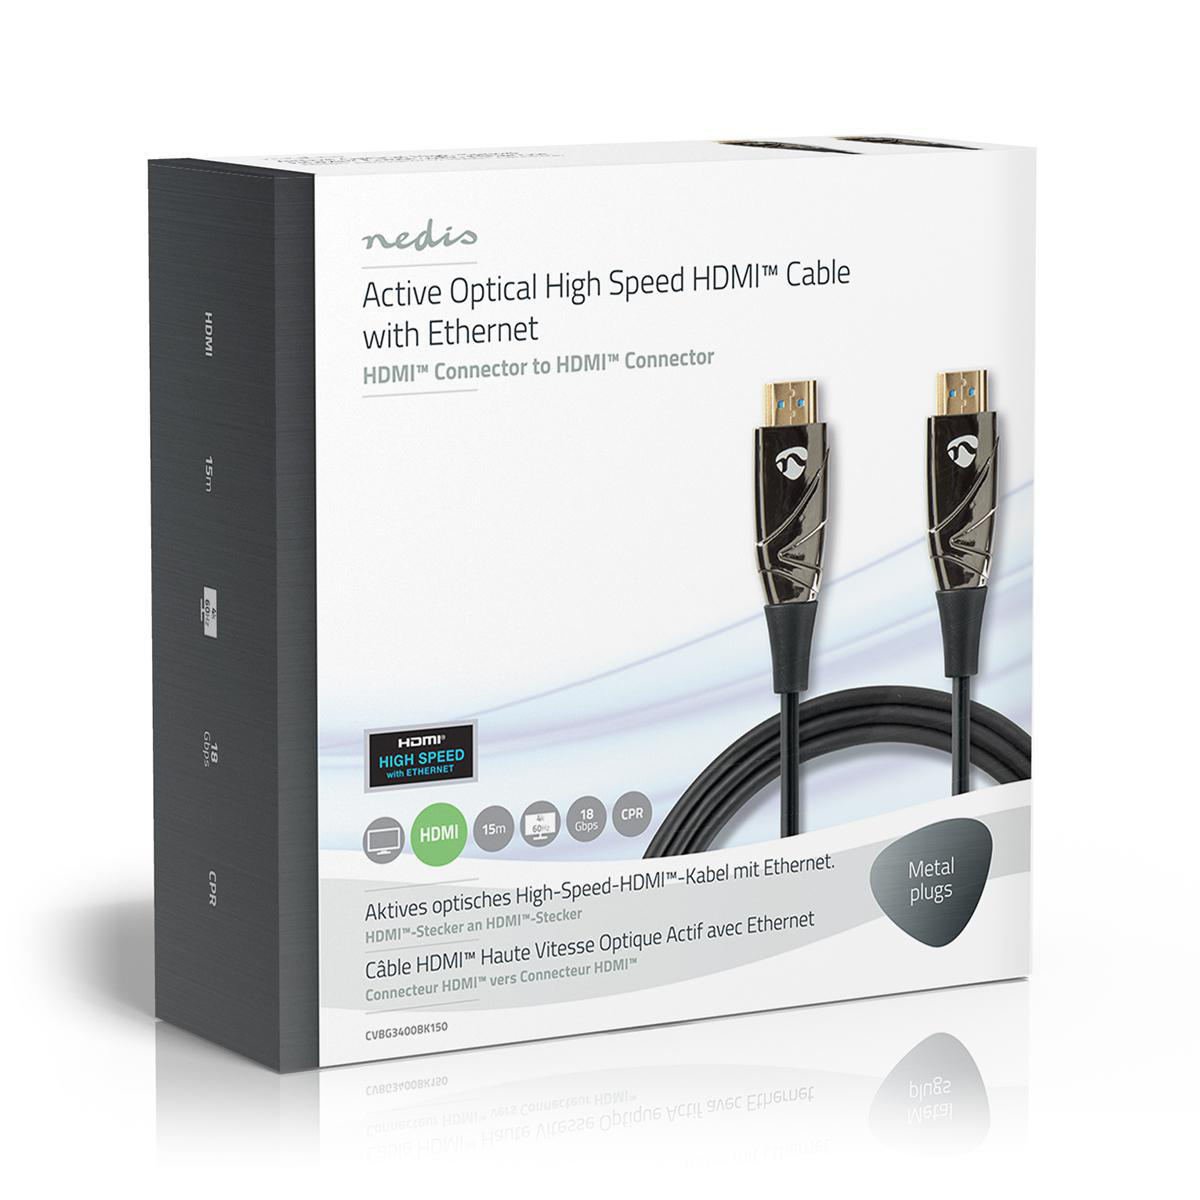 Aktive CVBG3400BK150 ​​HDMI-Kabel NEDIS optische